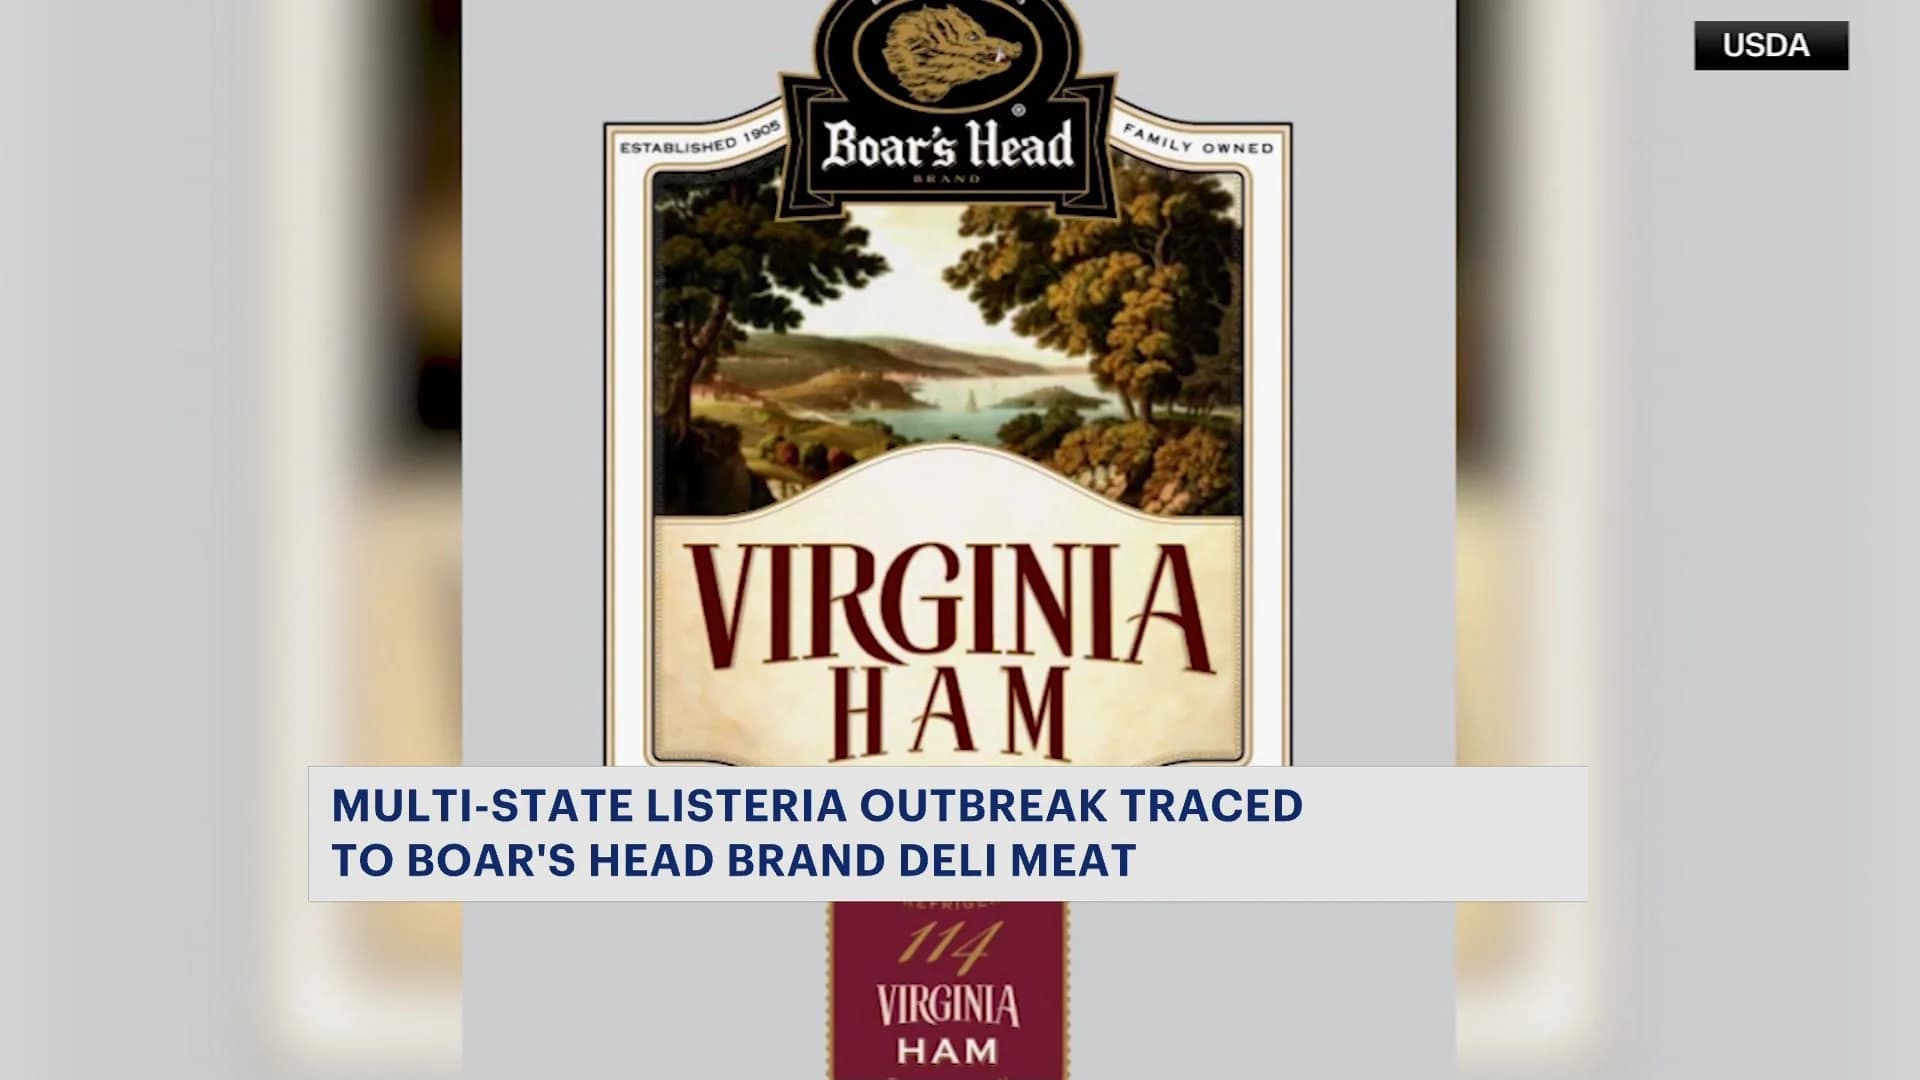 Hudson Valley doctors warn of listeria dangers following multi-state outbreak